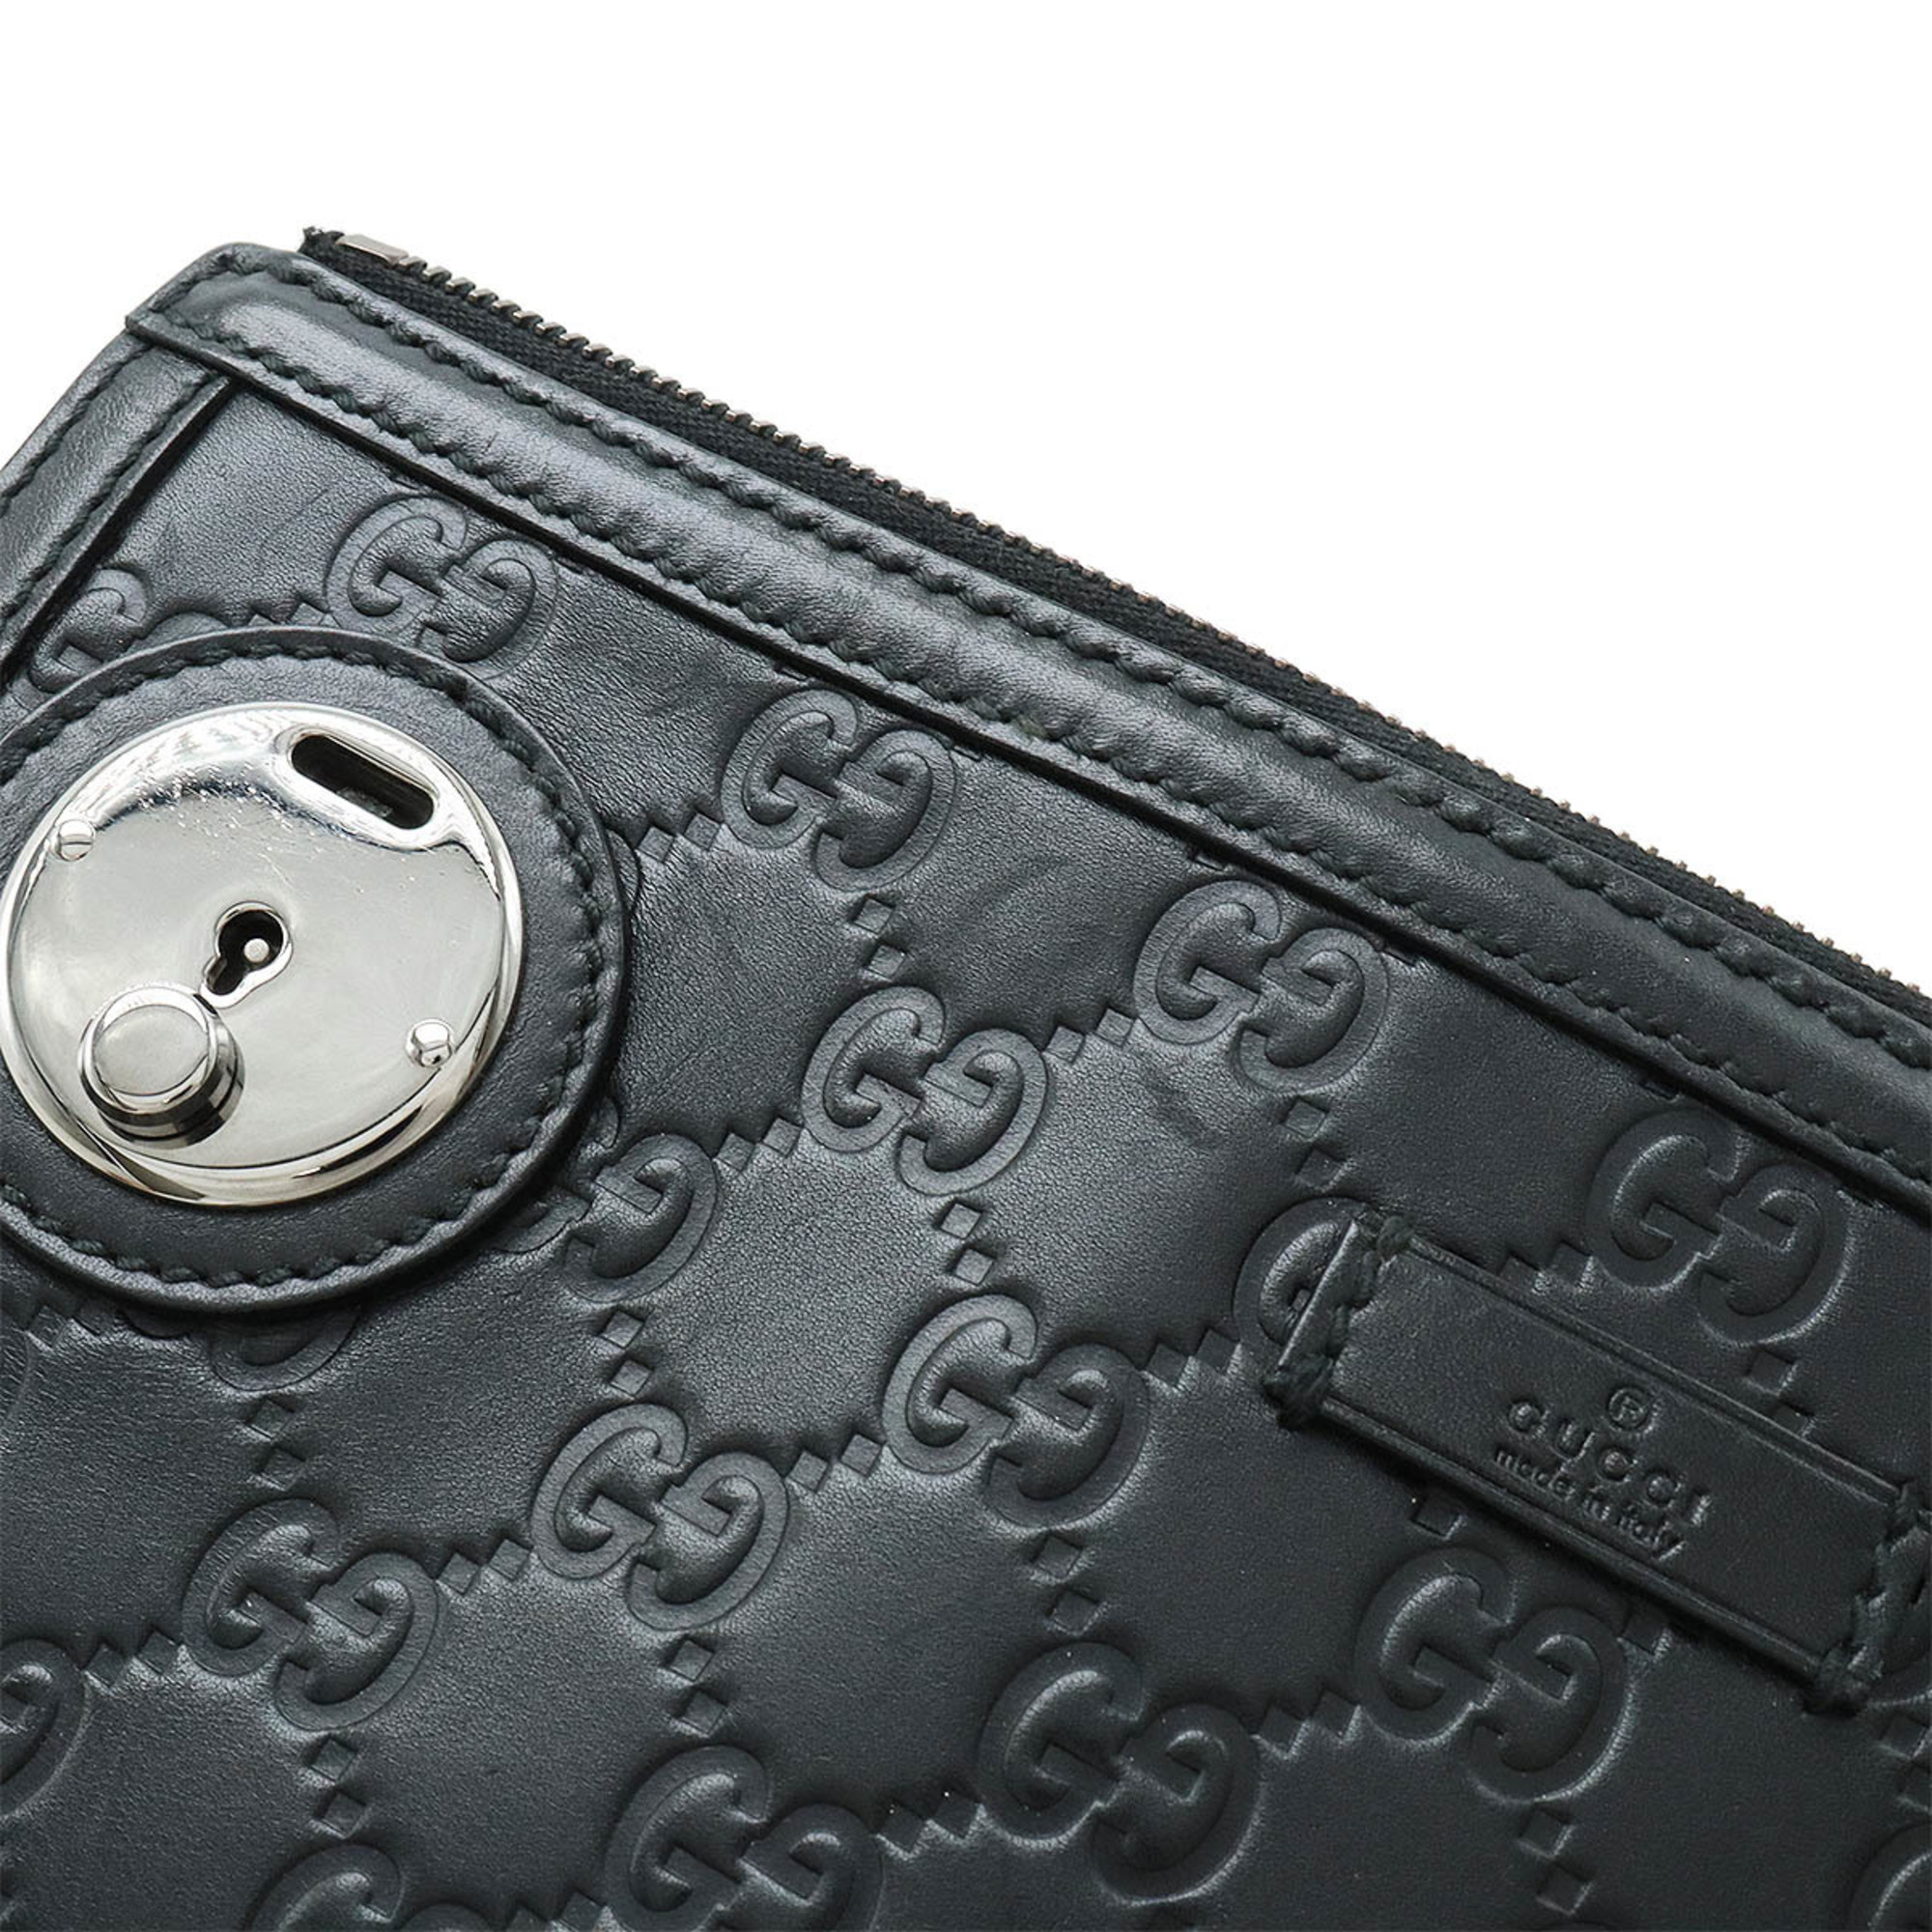 GUCCI Guccissima clutch bag, second handbag, leather, black, 152600